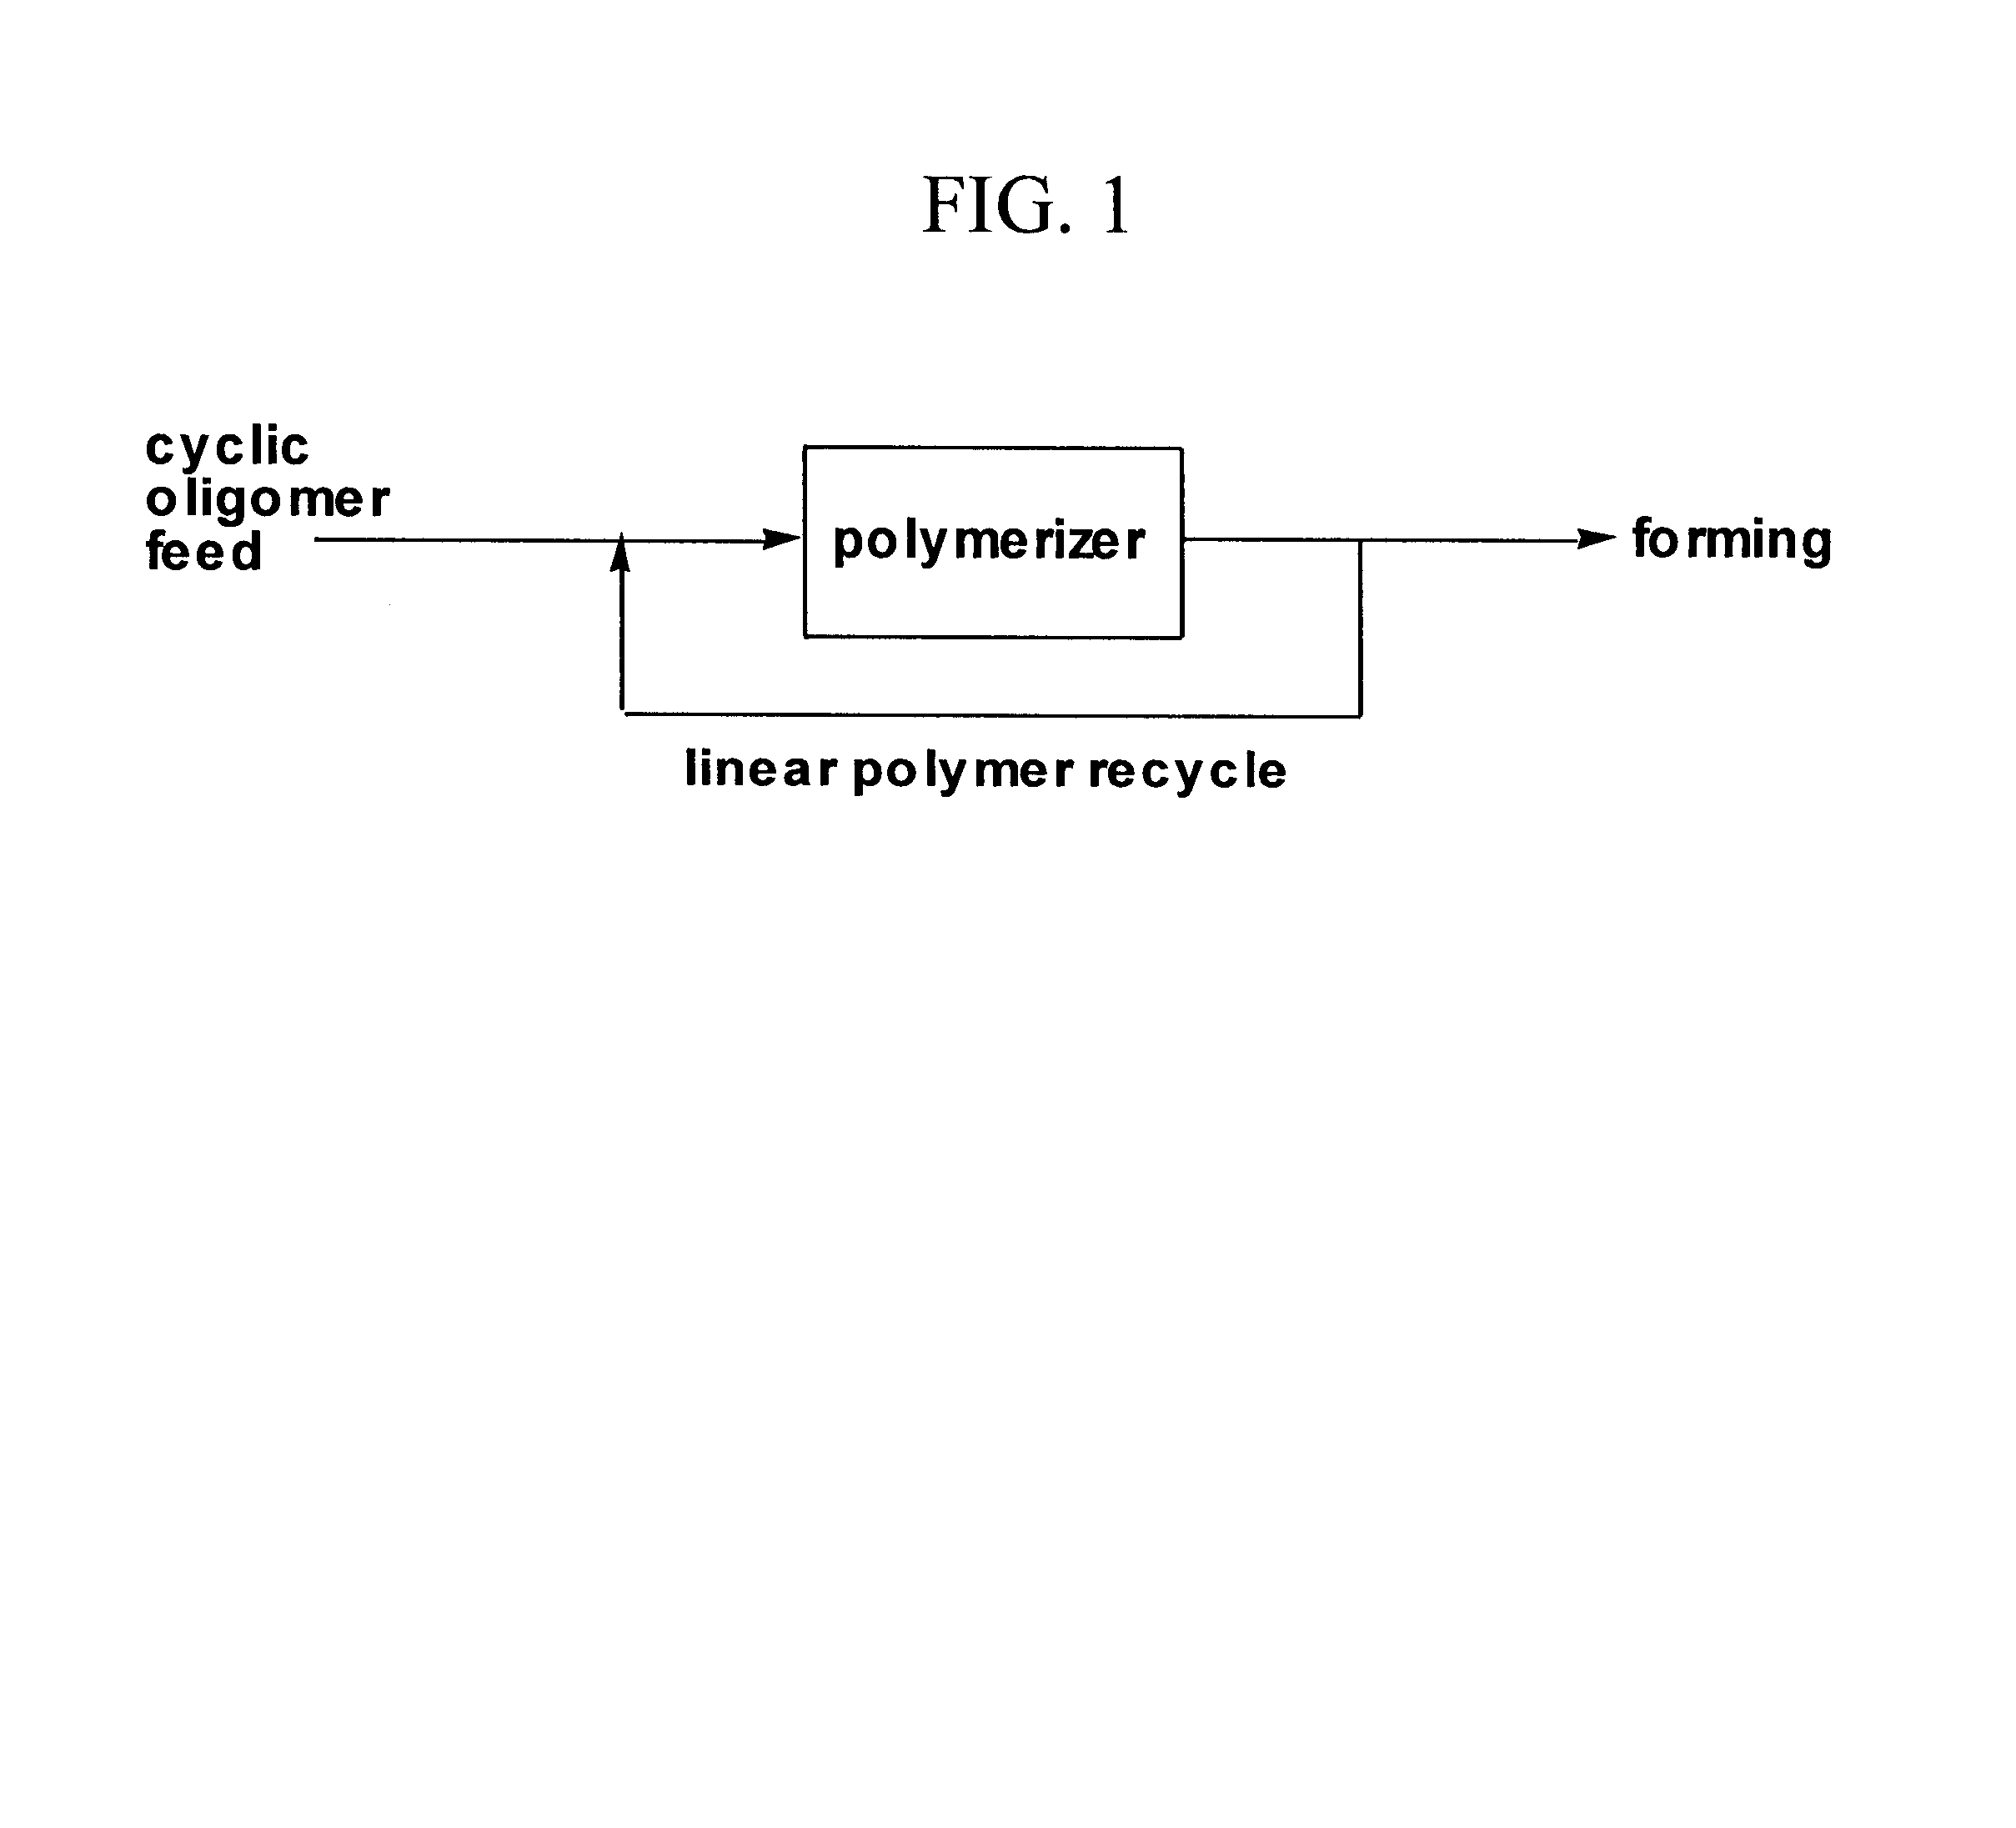 Polymerizations based on cyclic oligomer